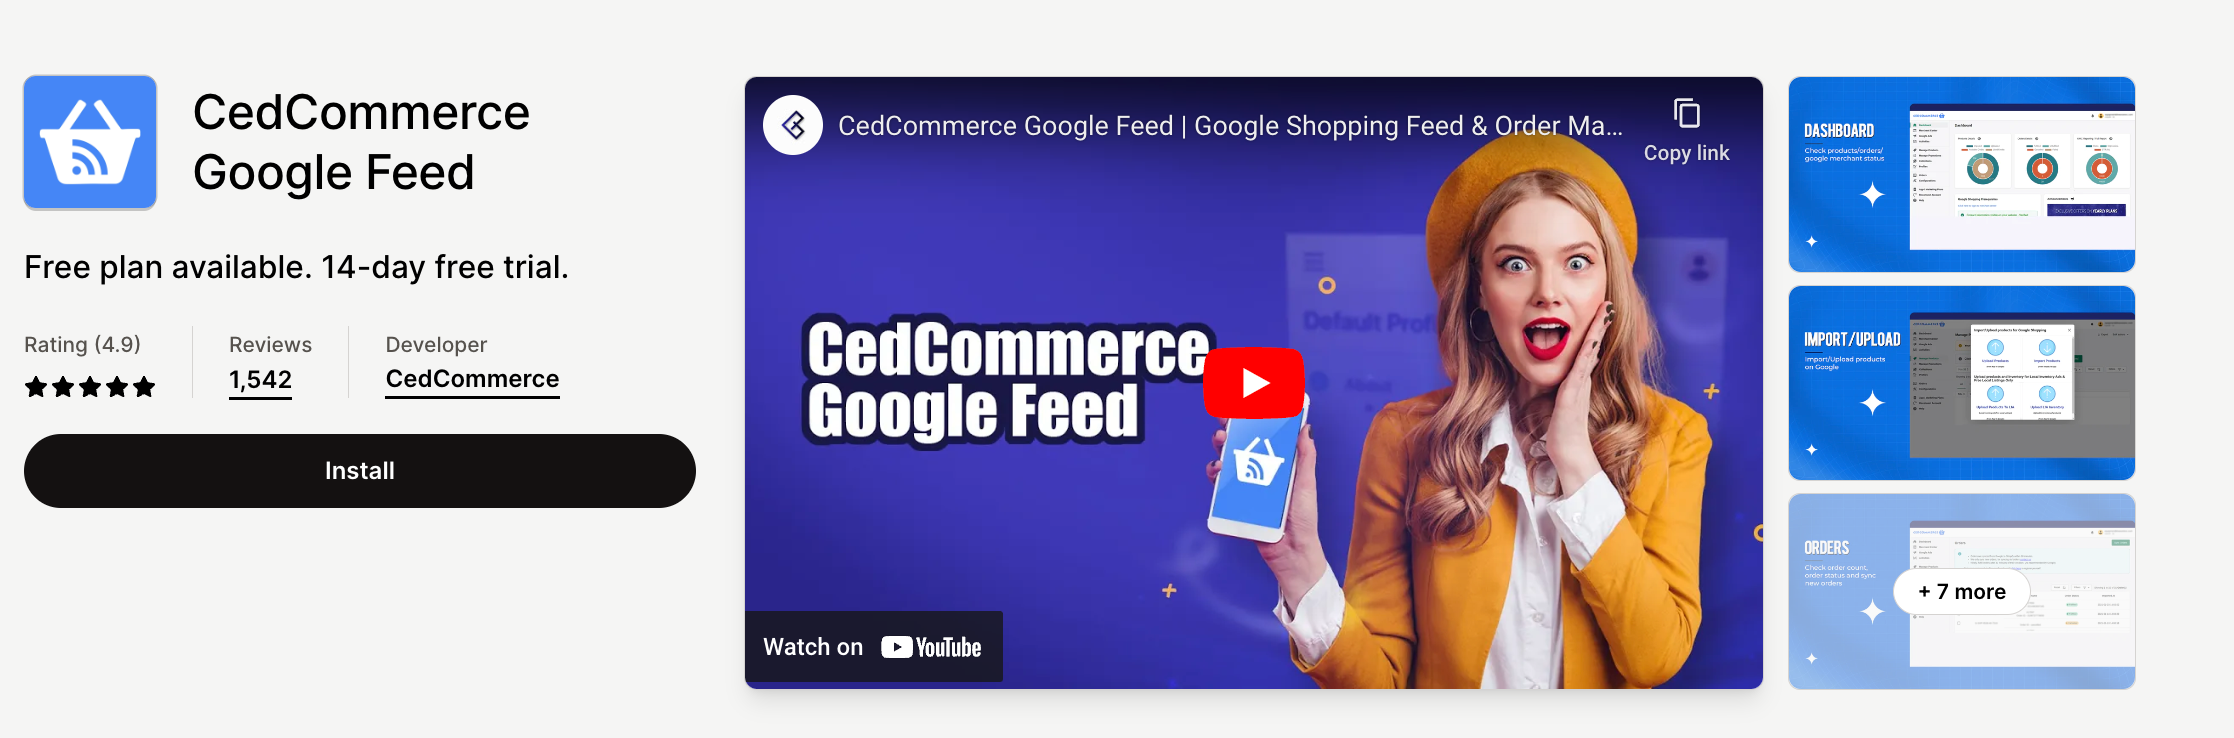 CedCommerce Google Feed